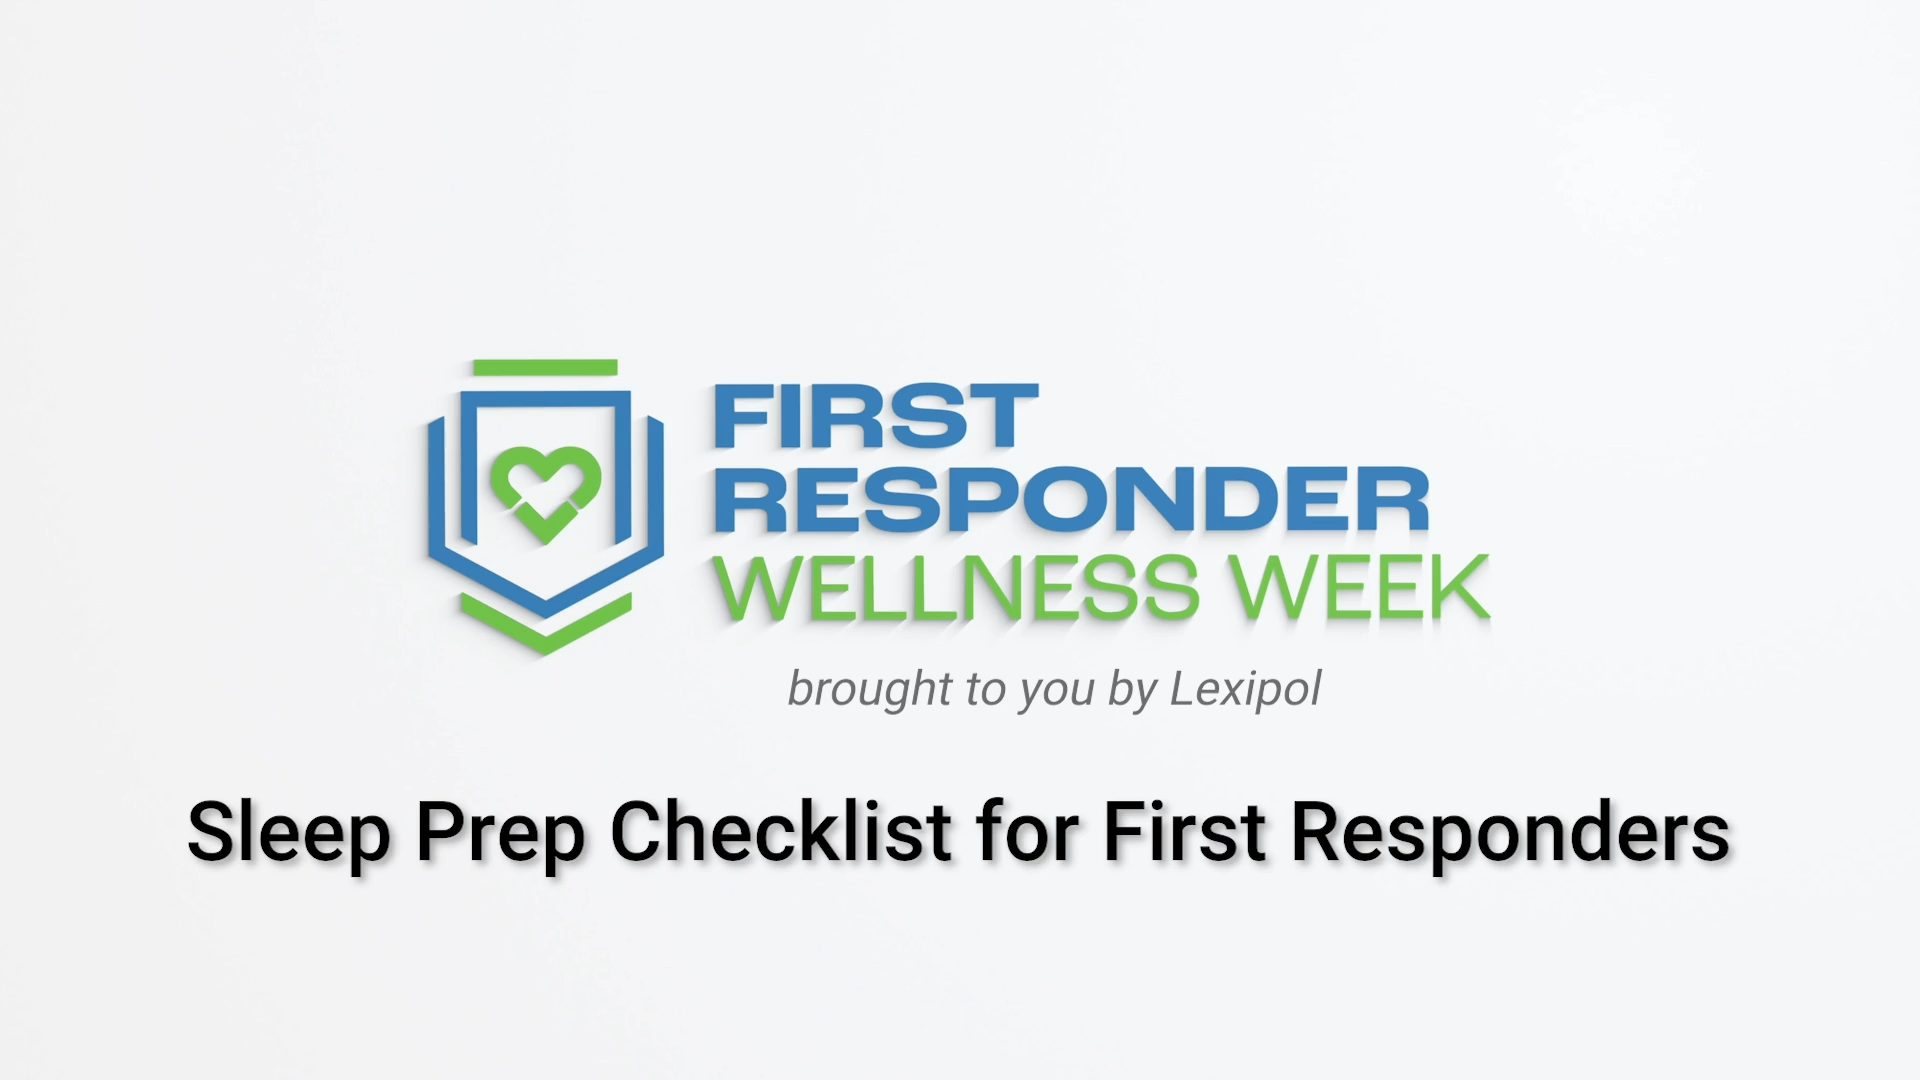 Sleep prep checklist for first responders